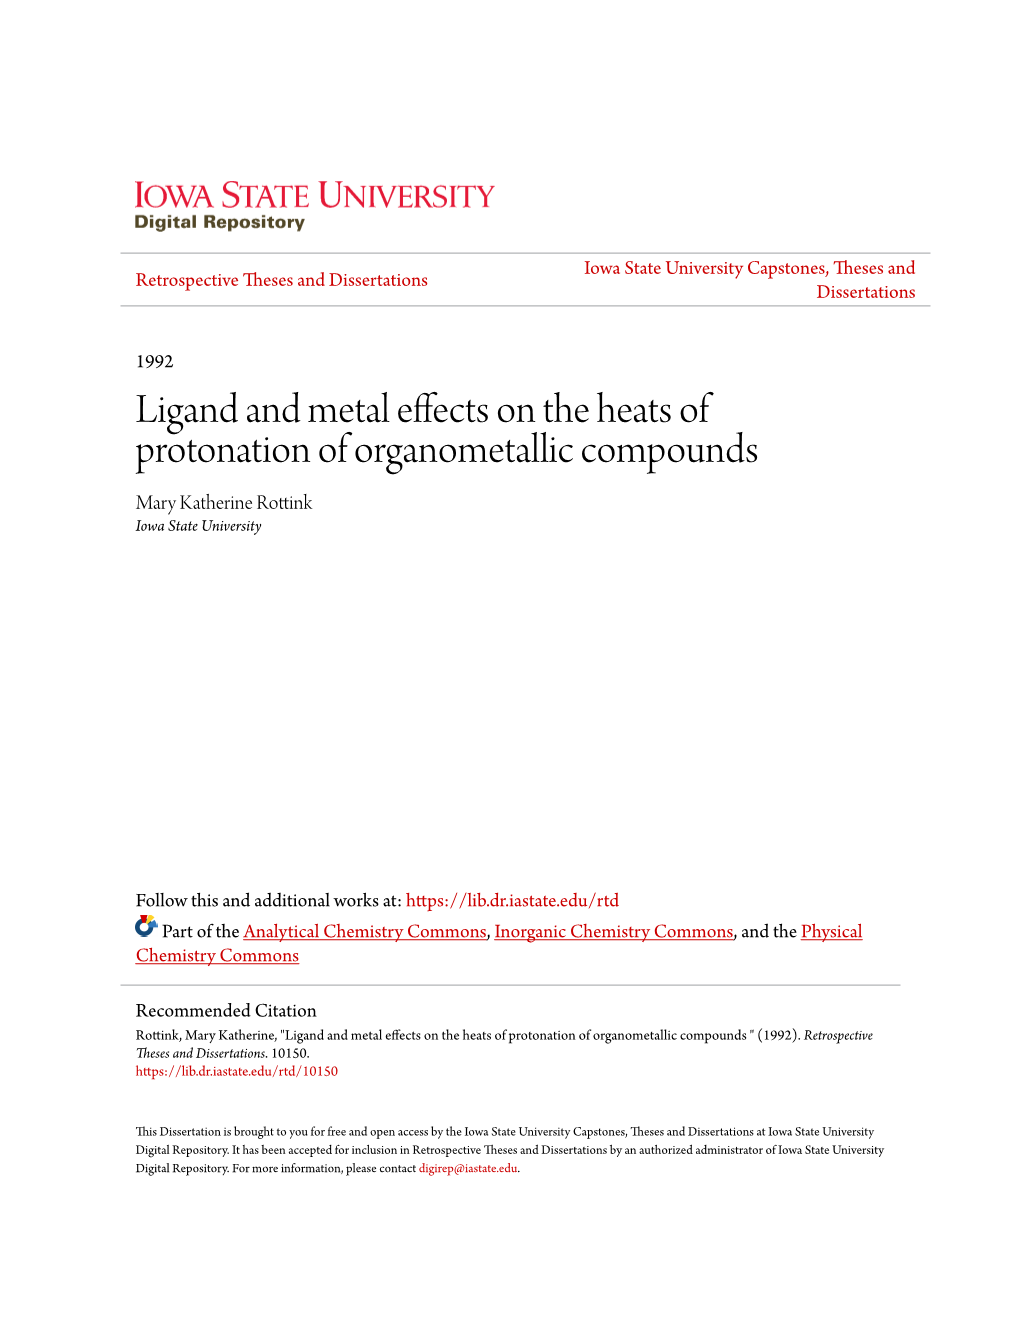 Ligand and Metal Effects on the Heats of Protonation of Organometallic Compounds Mary Katherine Rottink Iowa State University